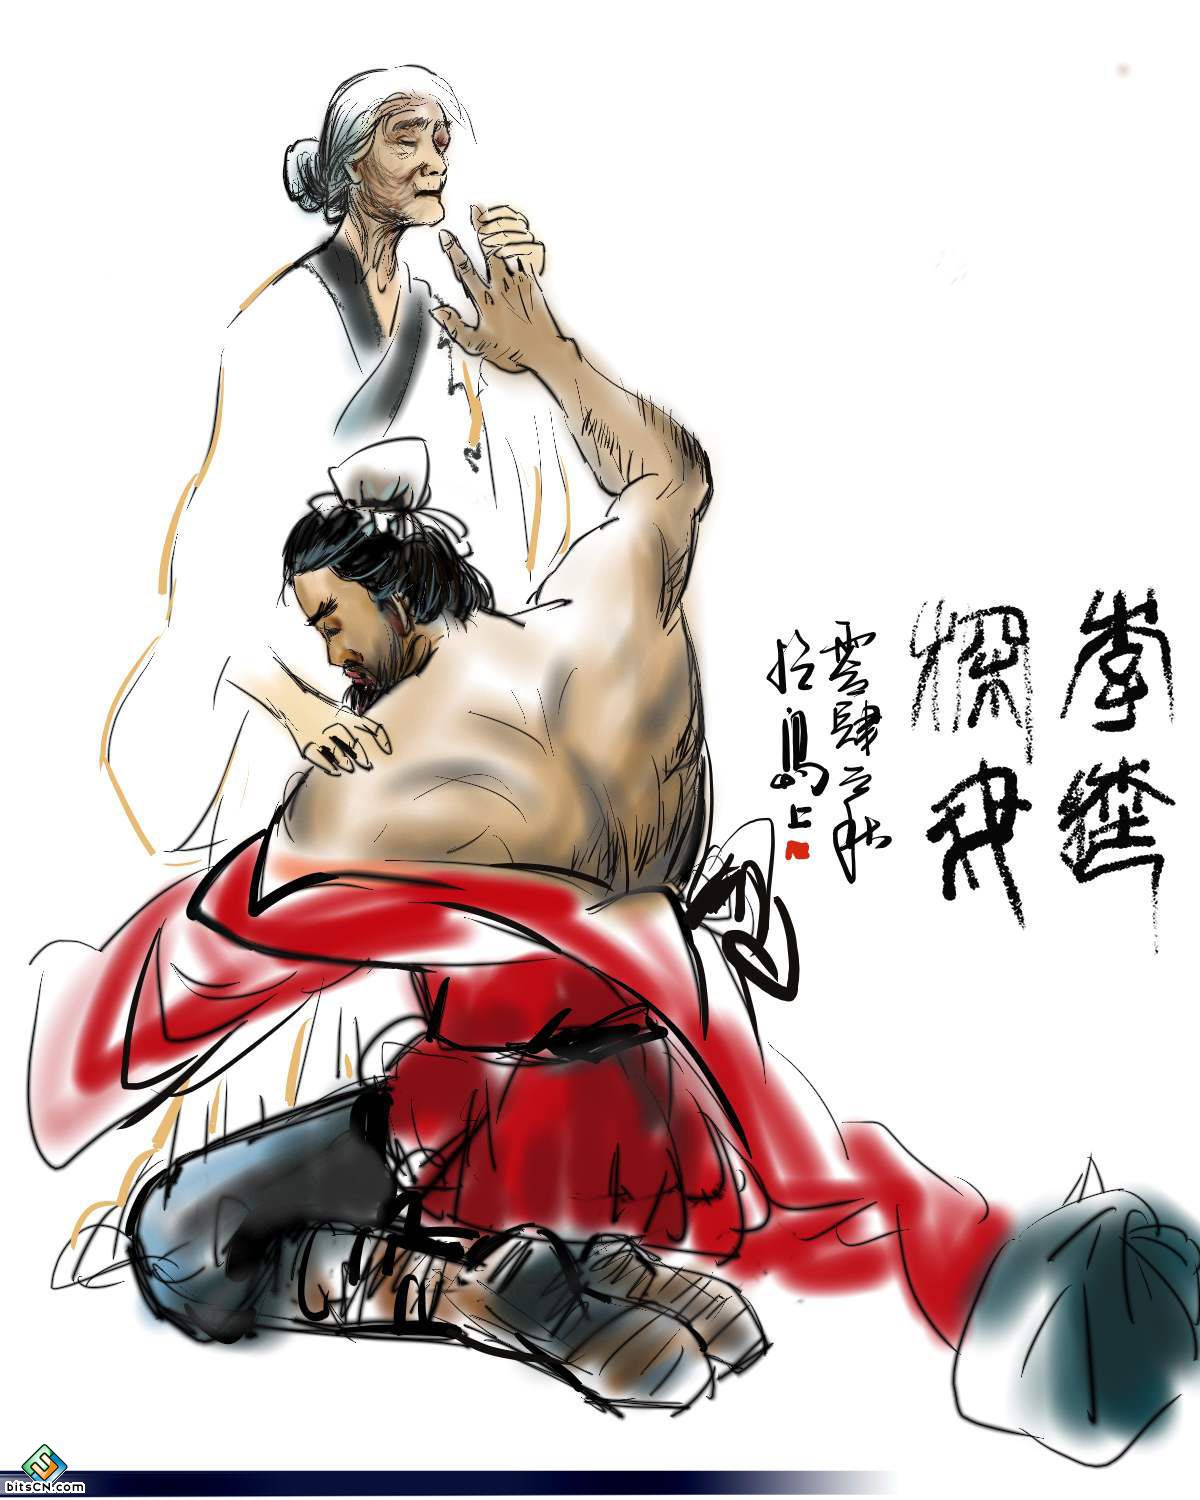 painter绘制经典国画《水浒传》中的一幅插画教程1